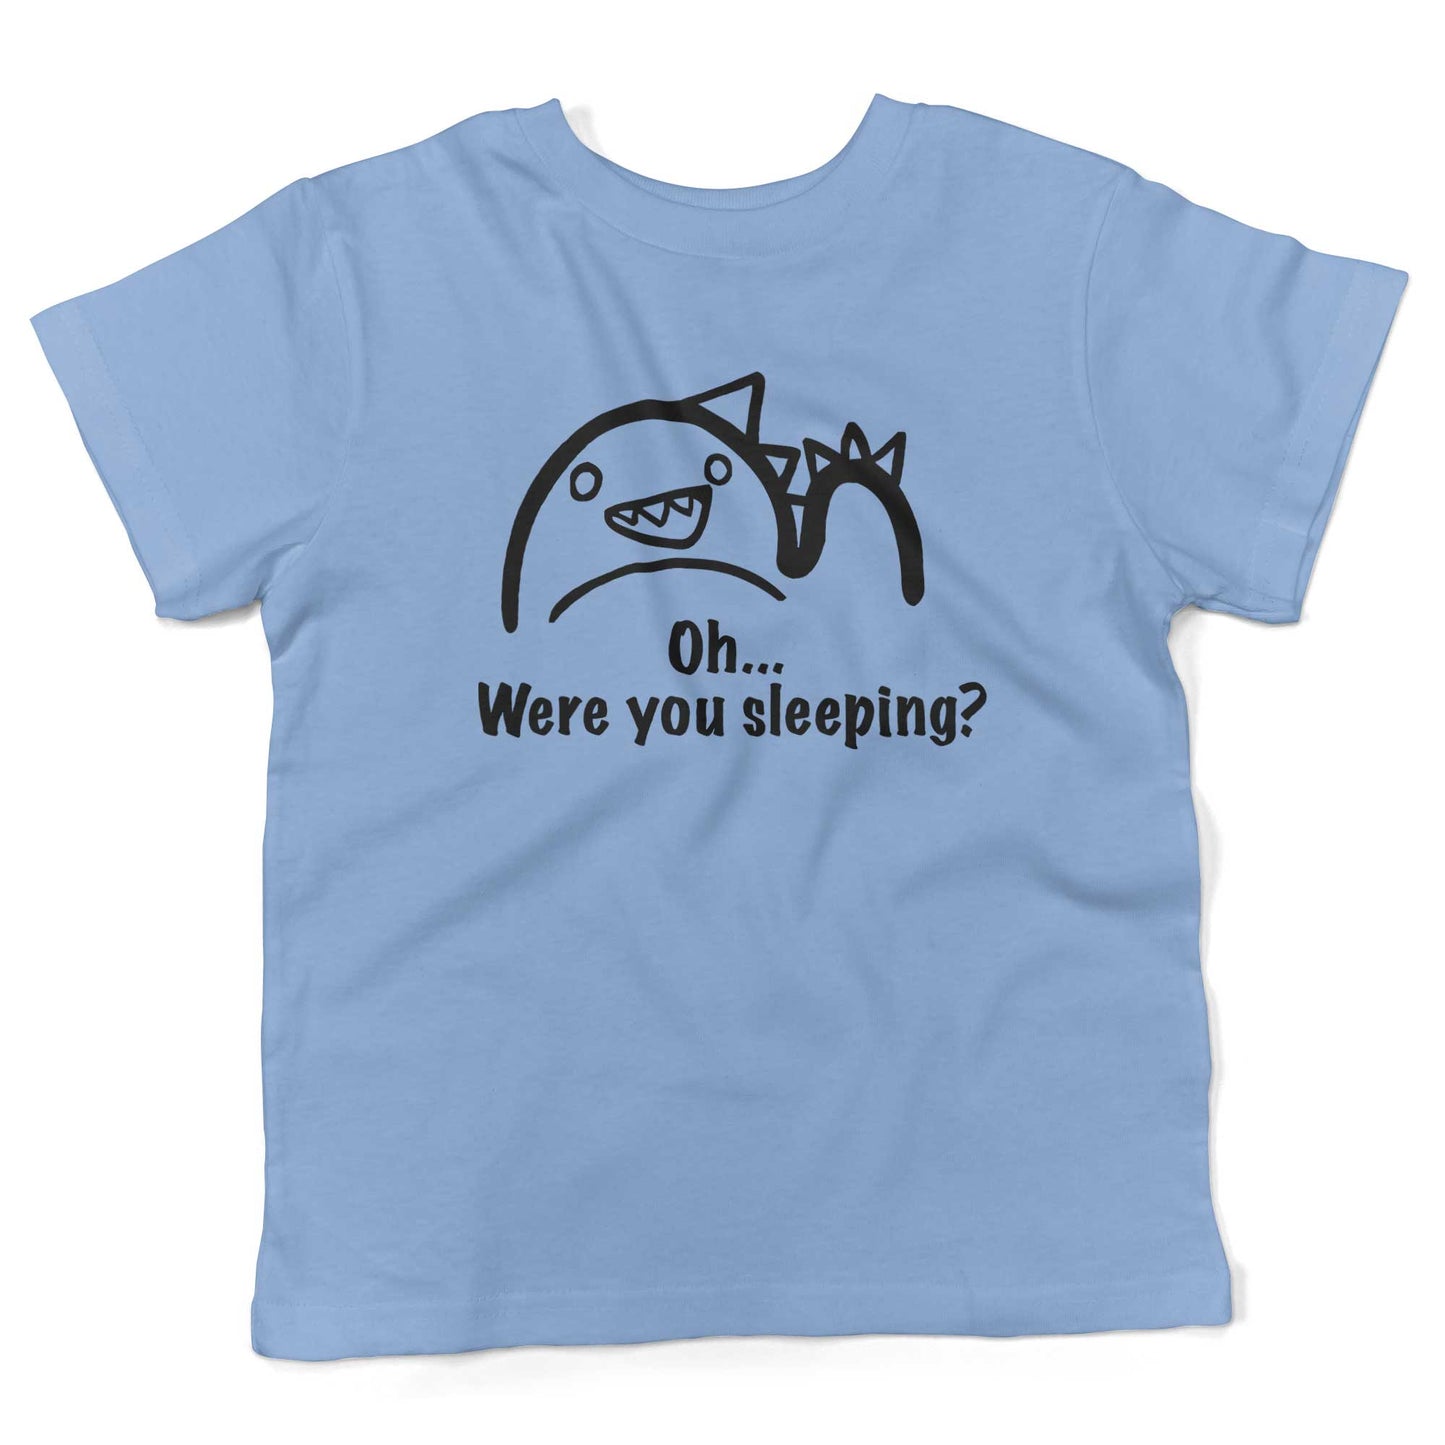 Oh...Were you sleeping? Toddler Shirt-Organic Baby Blue-2T